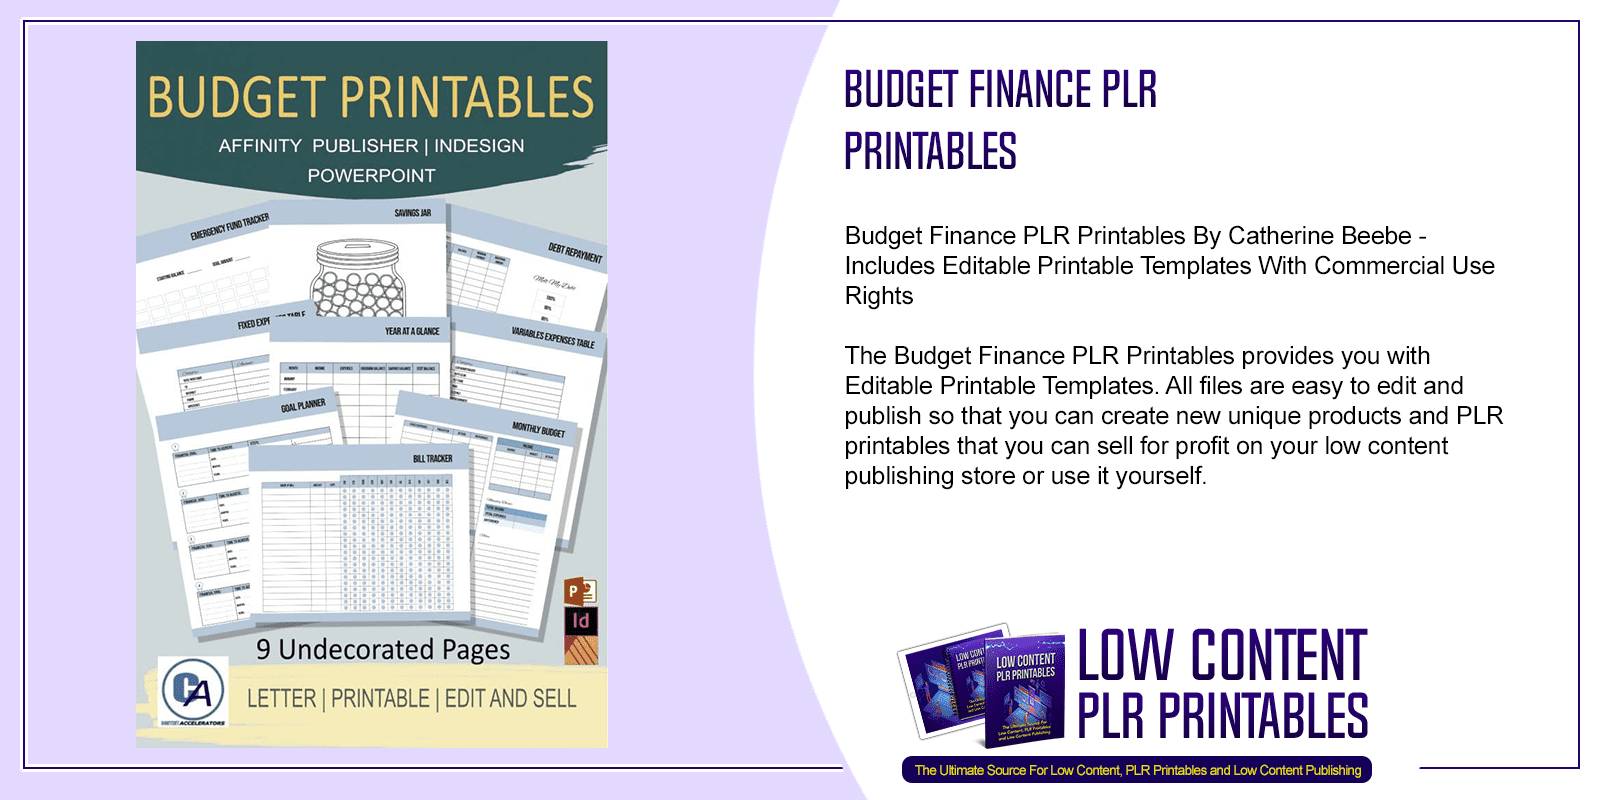 Budget Finance PLR Printables